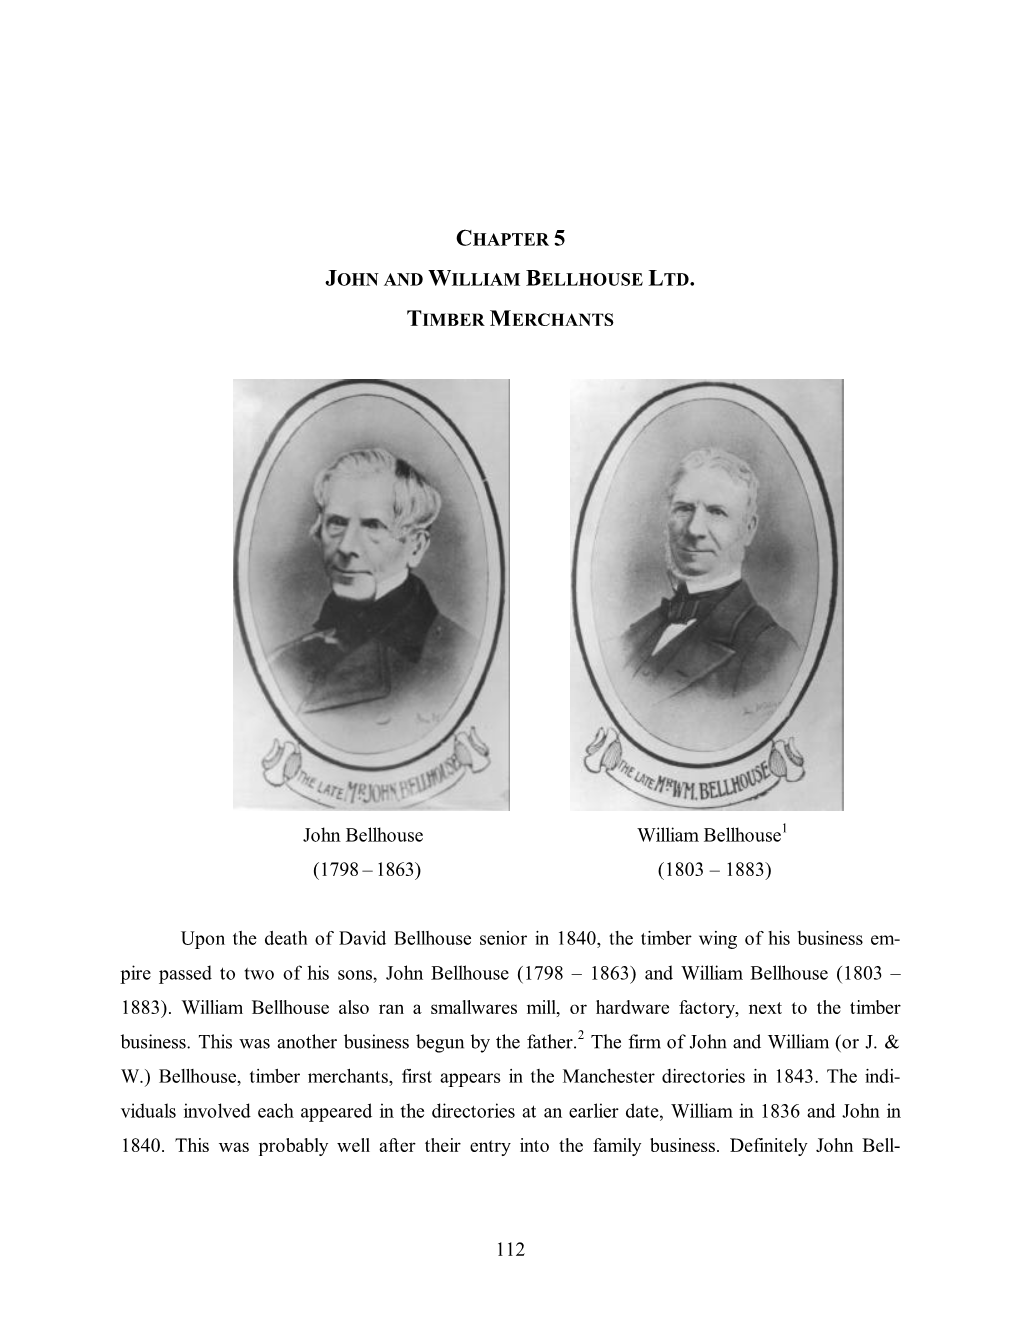 Chapter 5: John and William Bellhouse Ltd., Timber Merchants